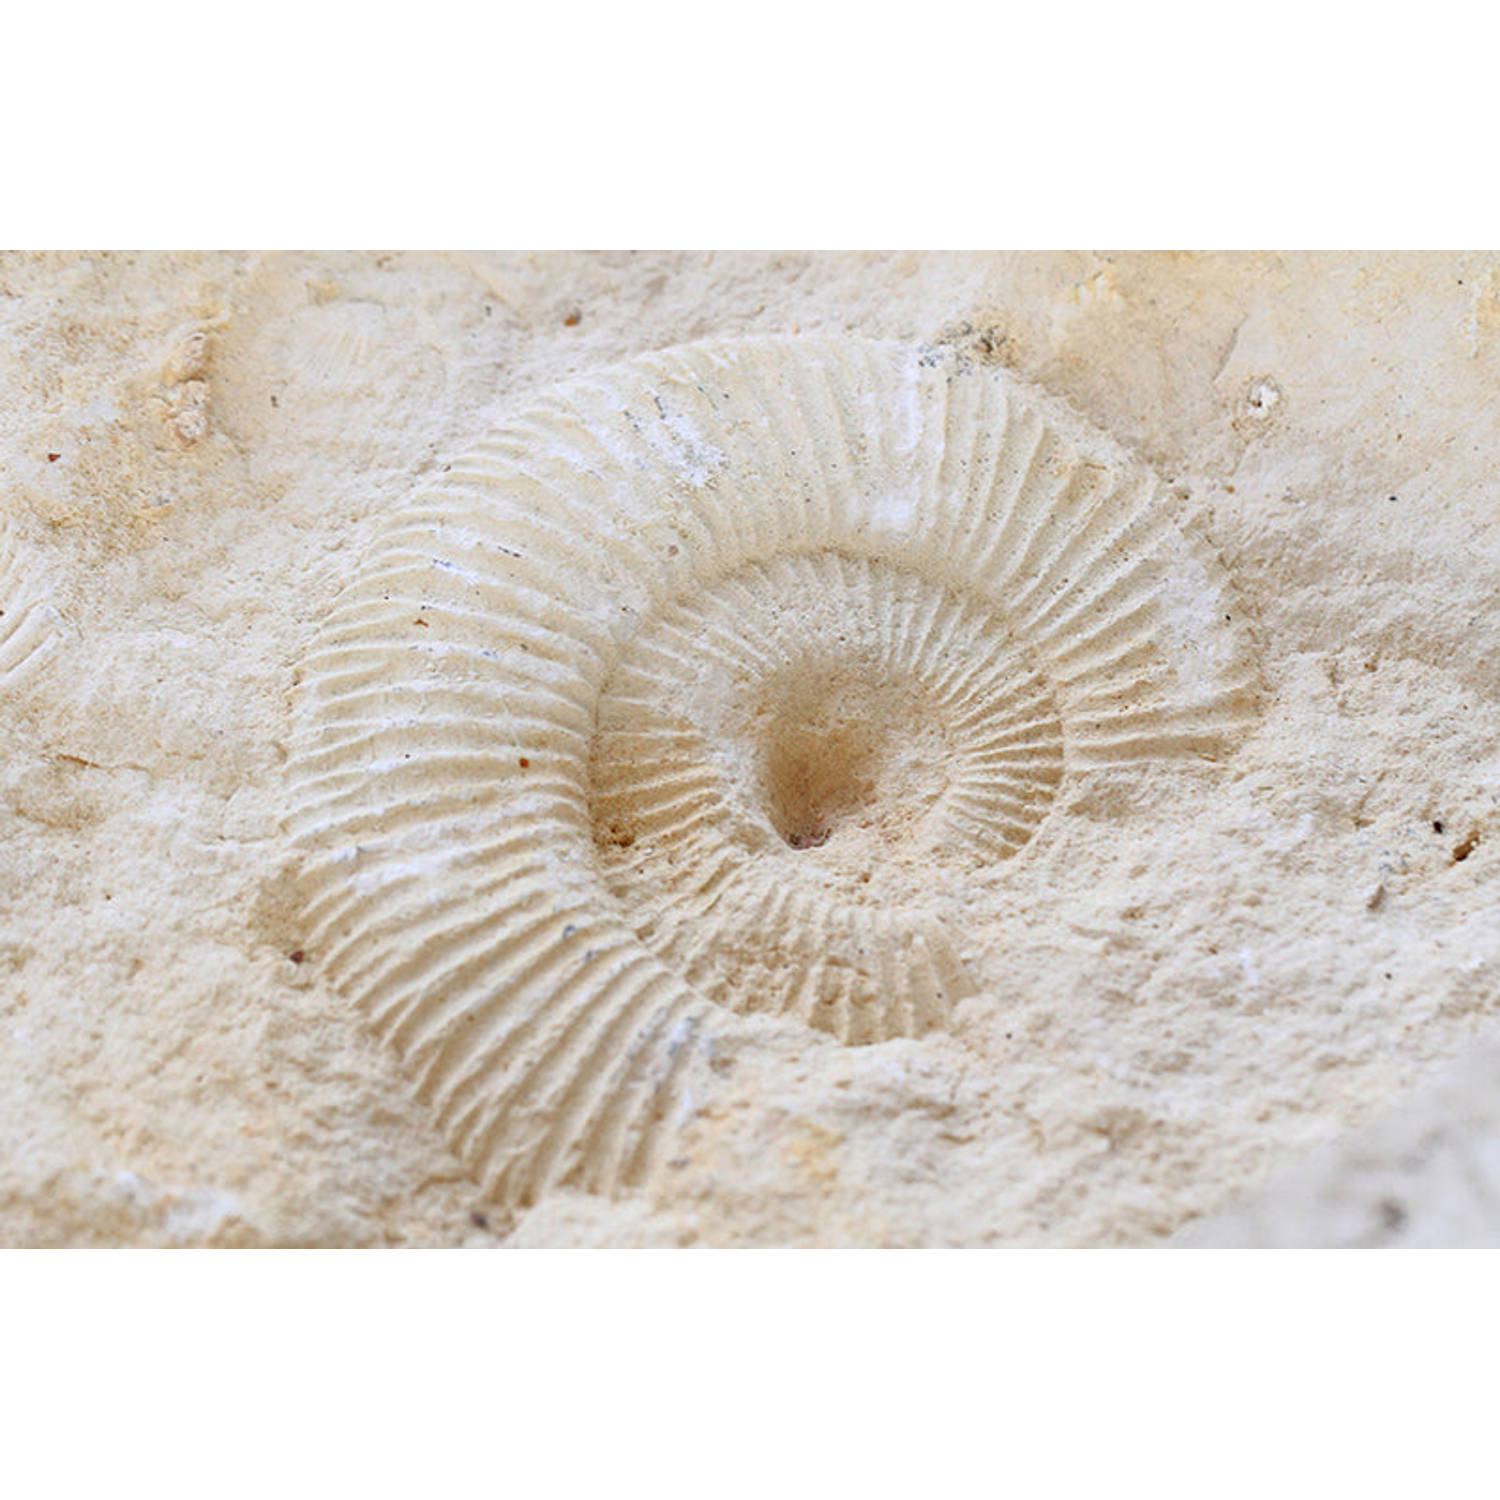 Inductiebeschermer - Ammonites Fossil - 89x52 cm - Inductiebeschermer - Inductie Afdekplaat Kookplaat - Inductie Mat - Anti-Slip - Keuken Decoratie - Keuken Accessoires